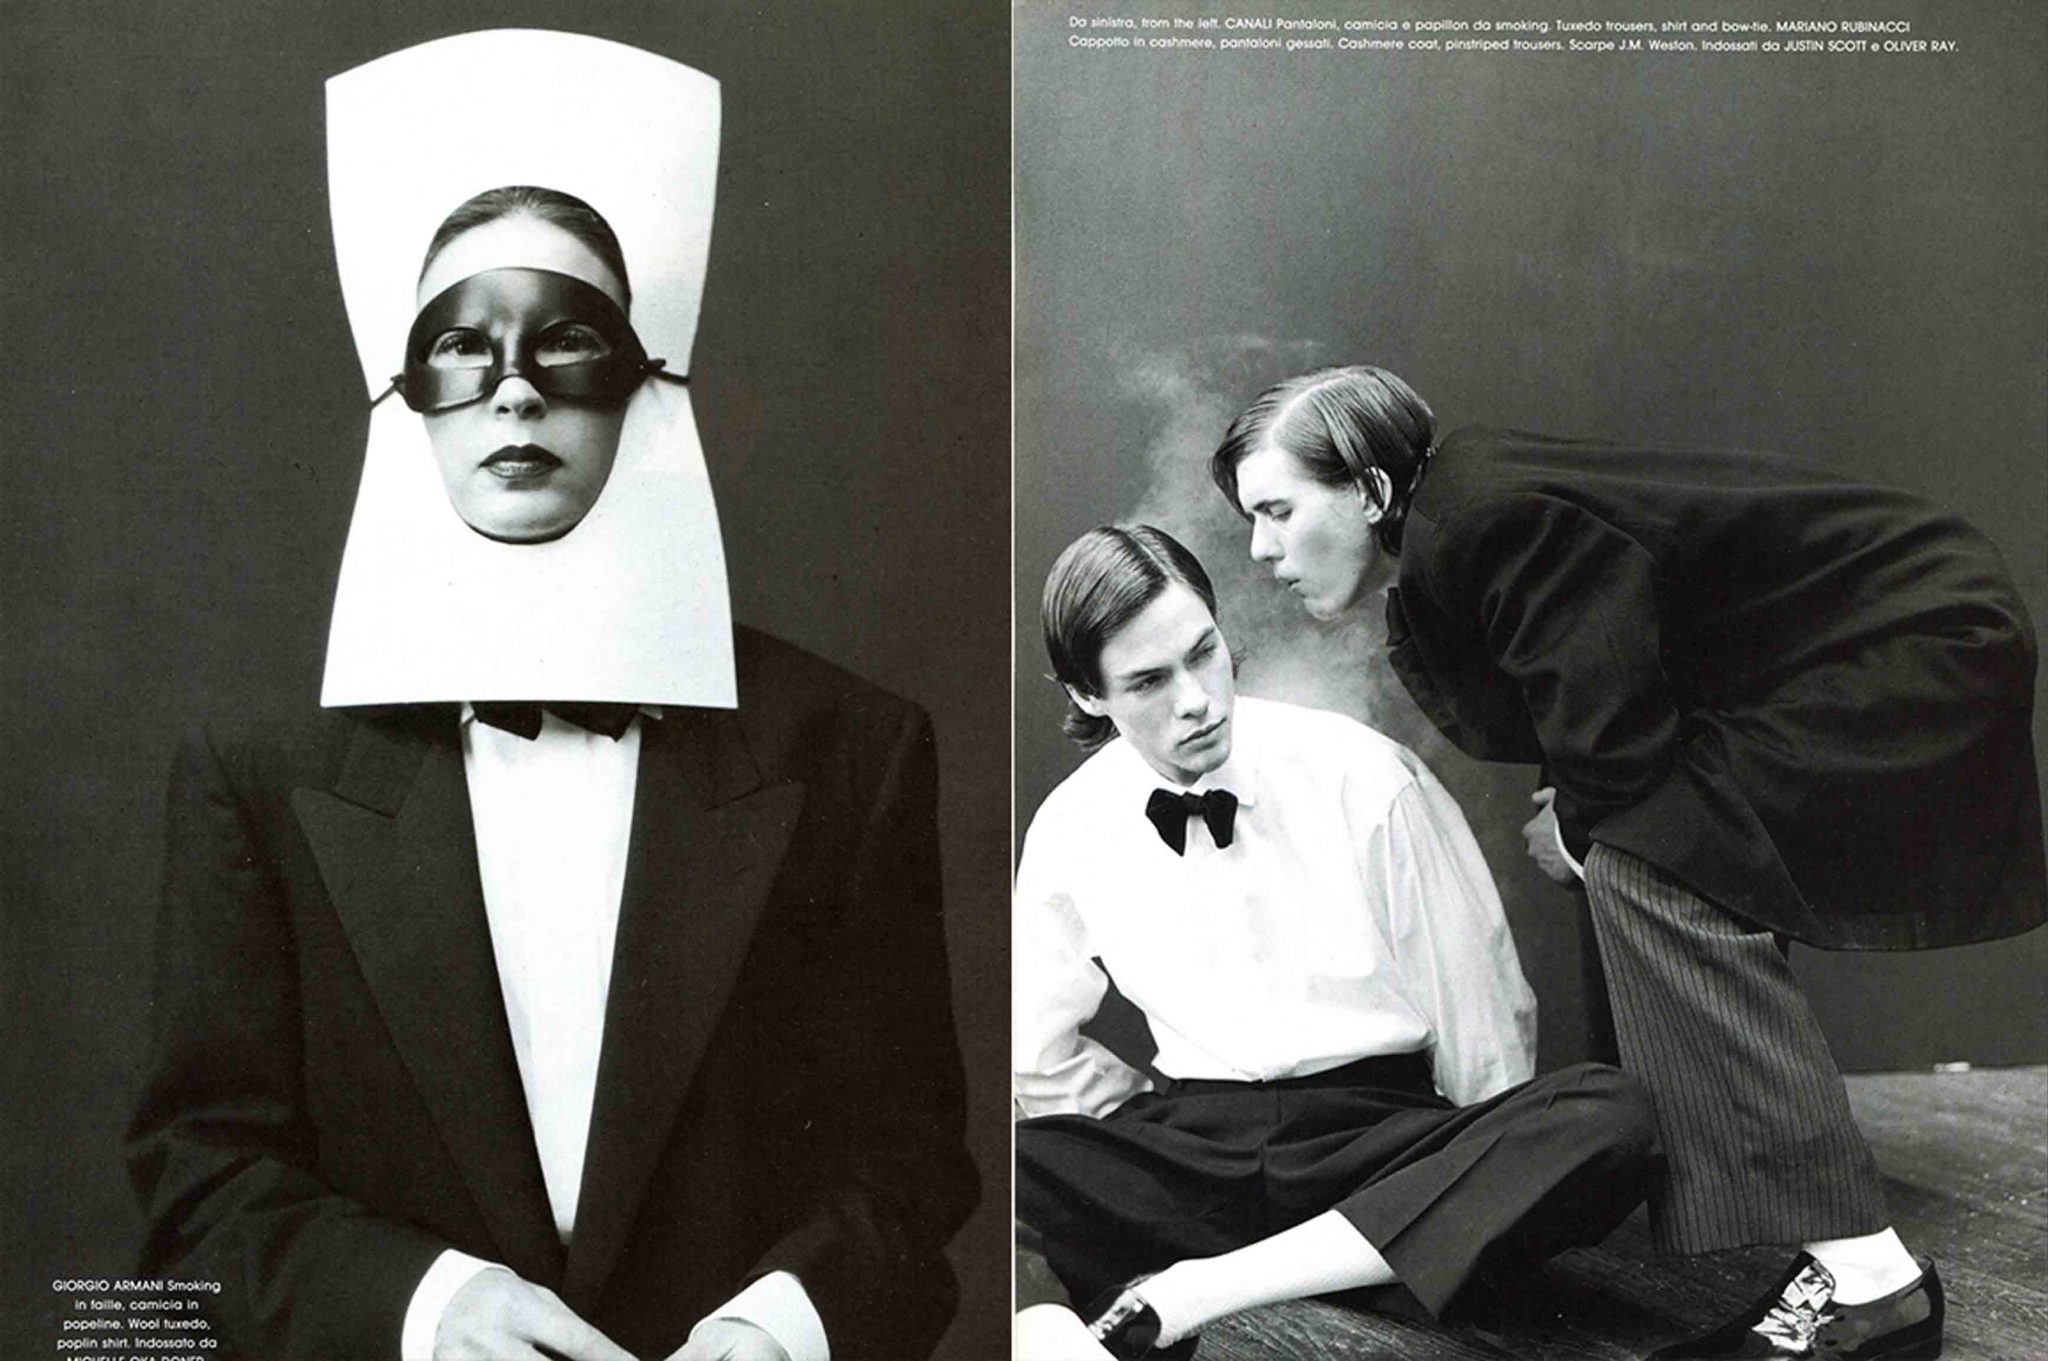 Paul Sinclaire | L'uomo Vogue by Steven klein: Tuxedo and Coats | 4